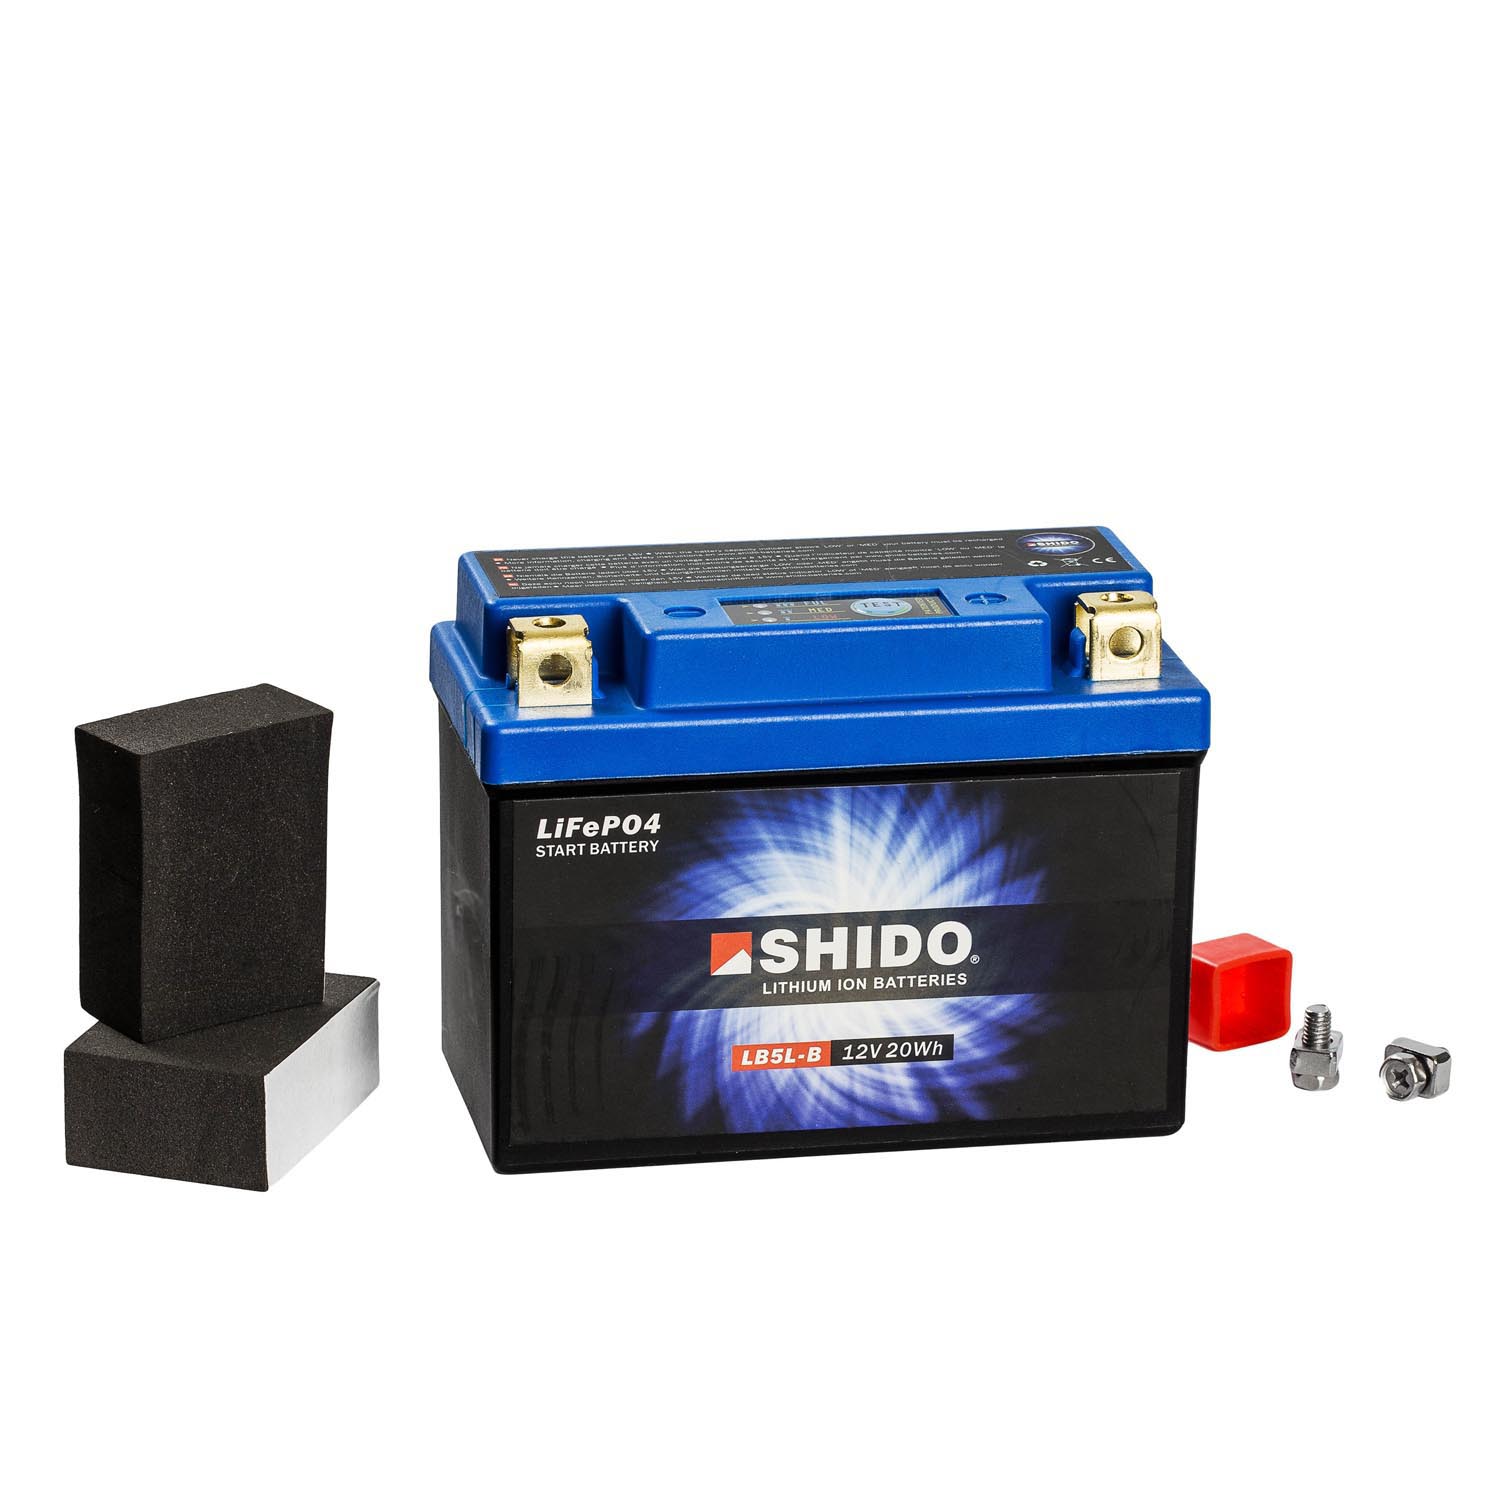 Shido Lithium Motorradbatterie LiFePO4 LB5L-B 12V